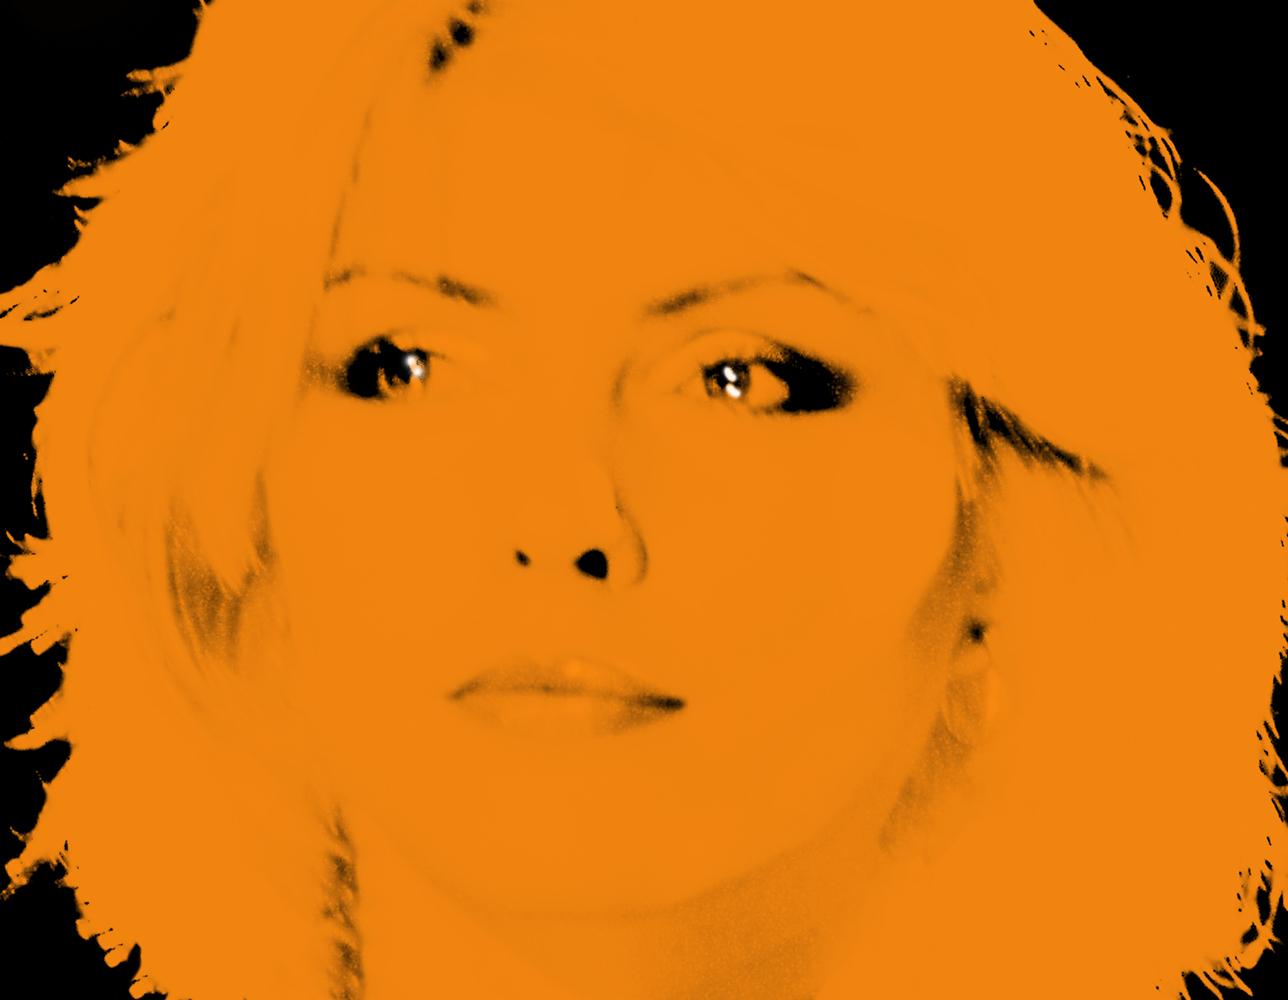 BATIK Portrait Print - Blondie Orange - Hand Signed Limited Edition